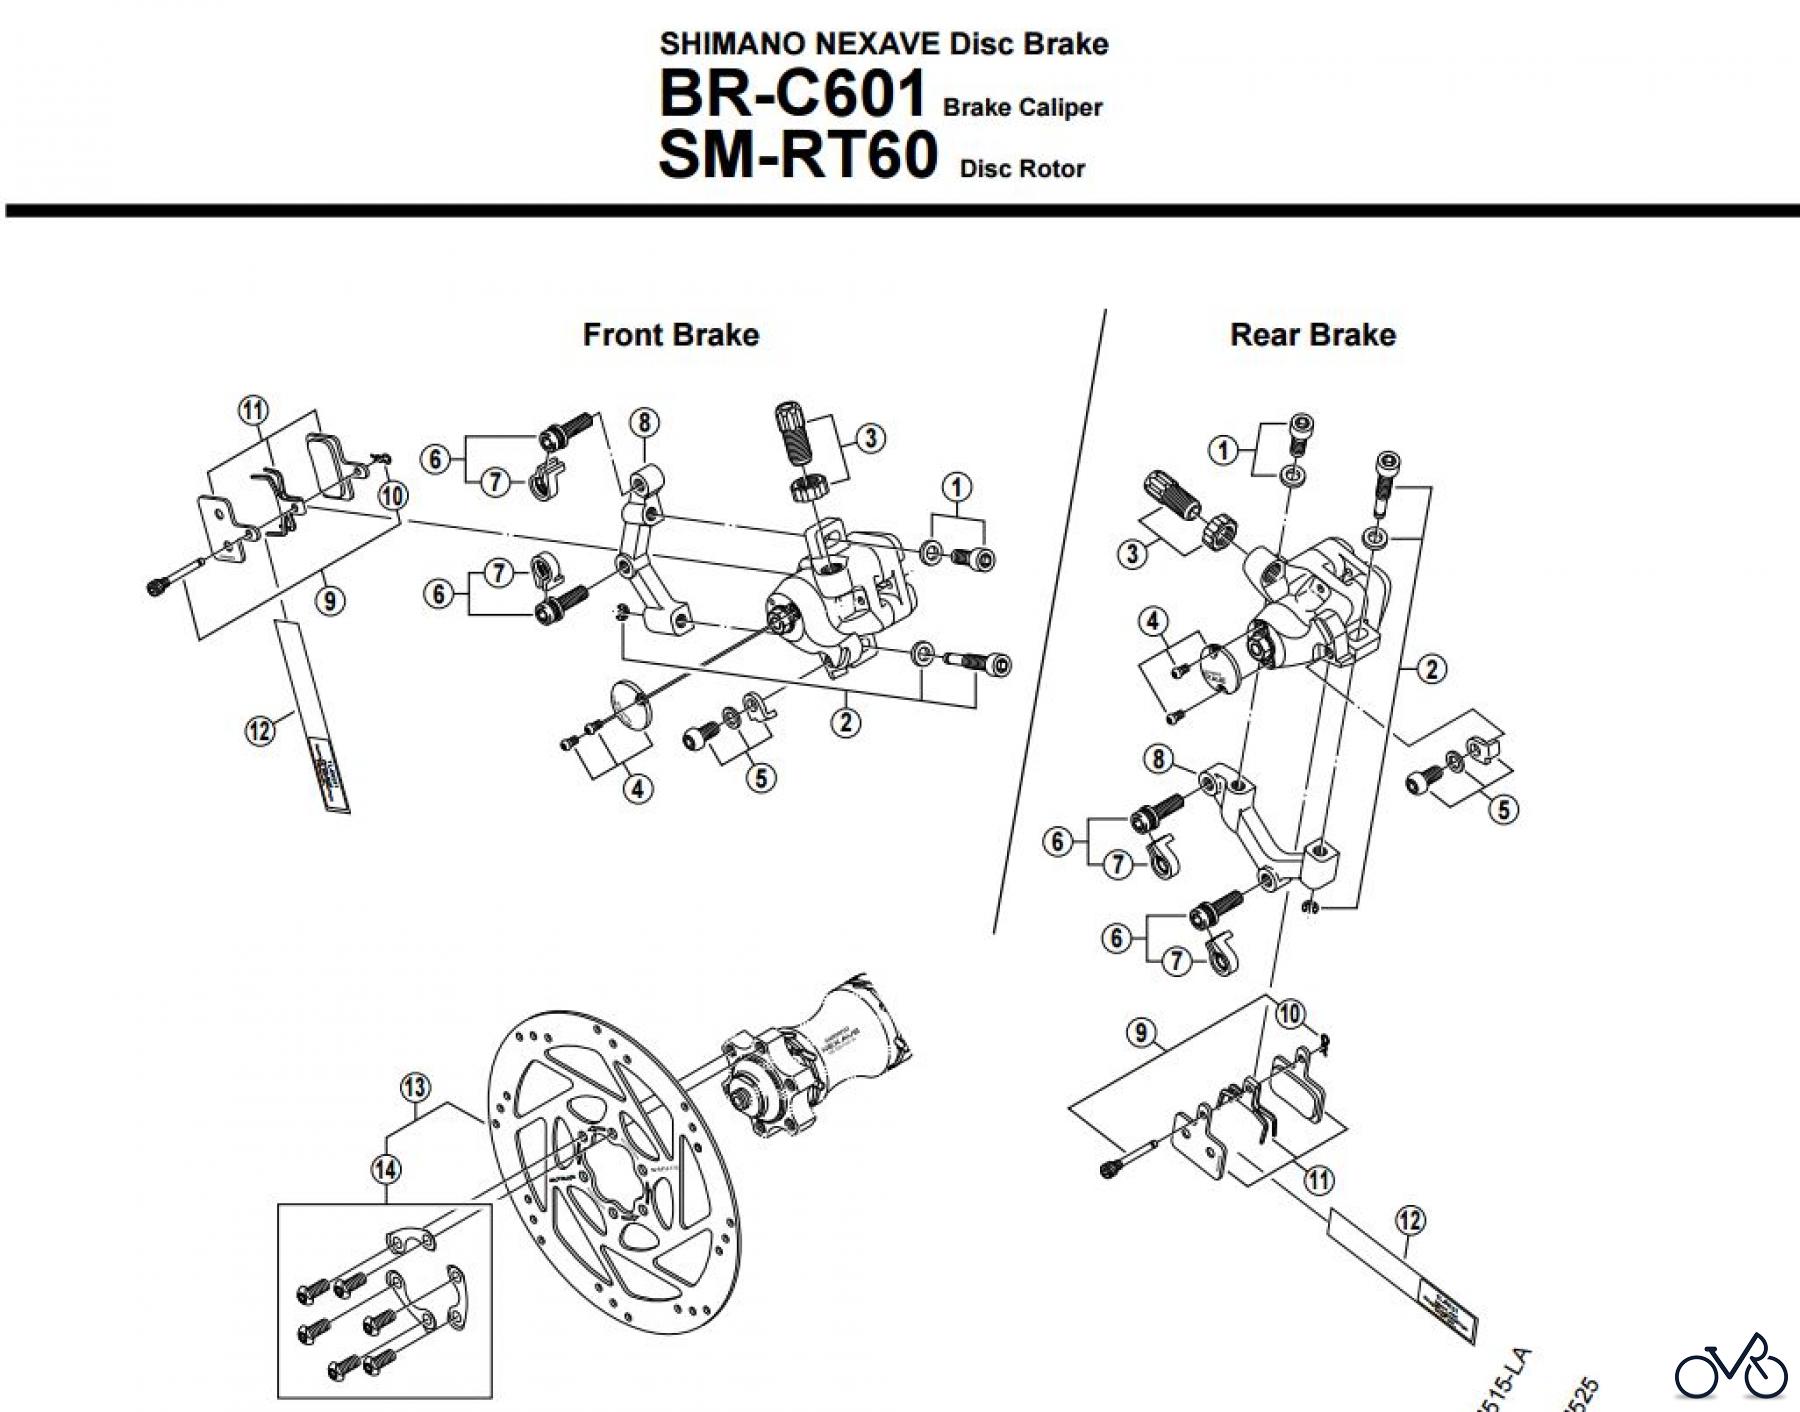  Shimano BR Brake - Bremse BR-C601 -2078A SHIMANO NEXAVE Disc Brake